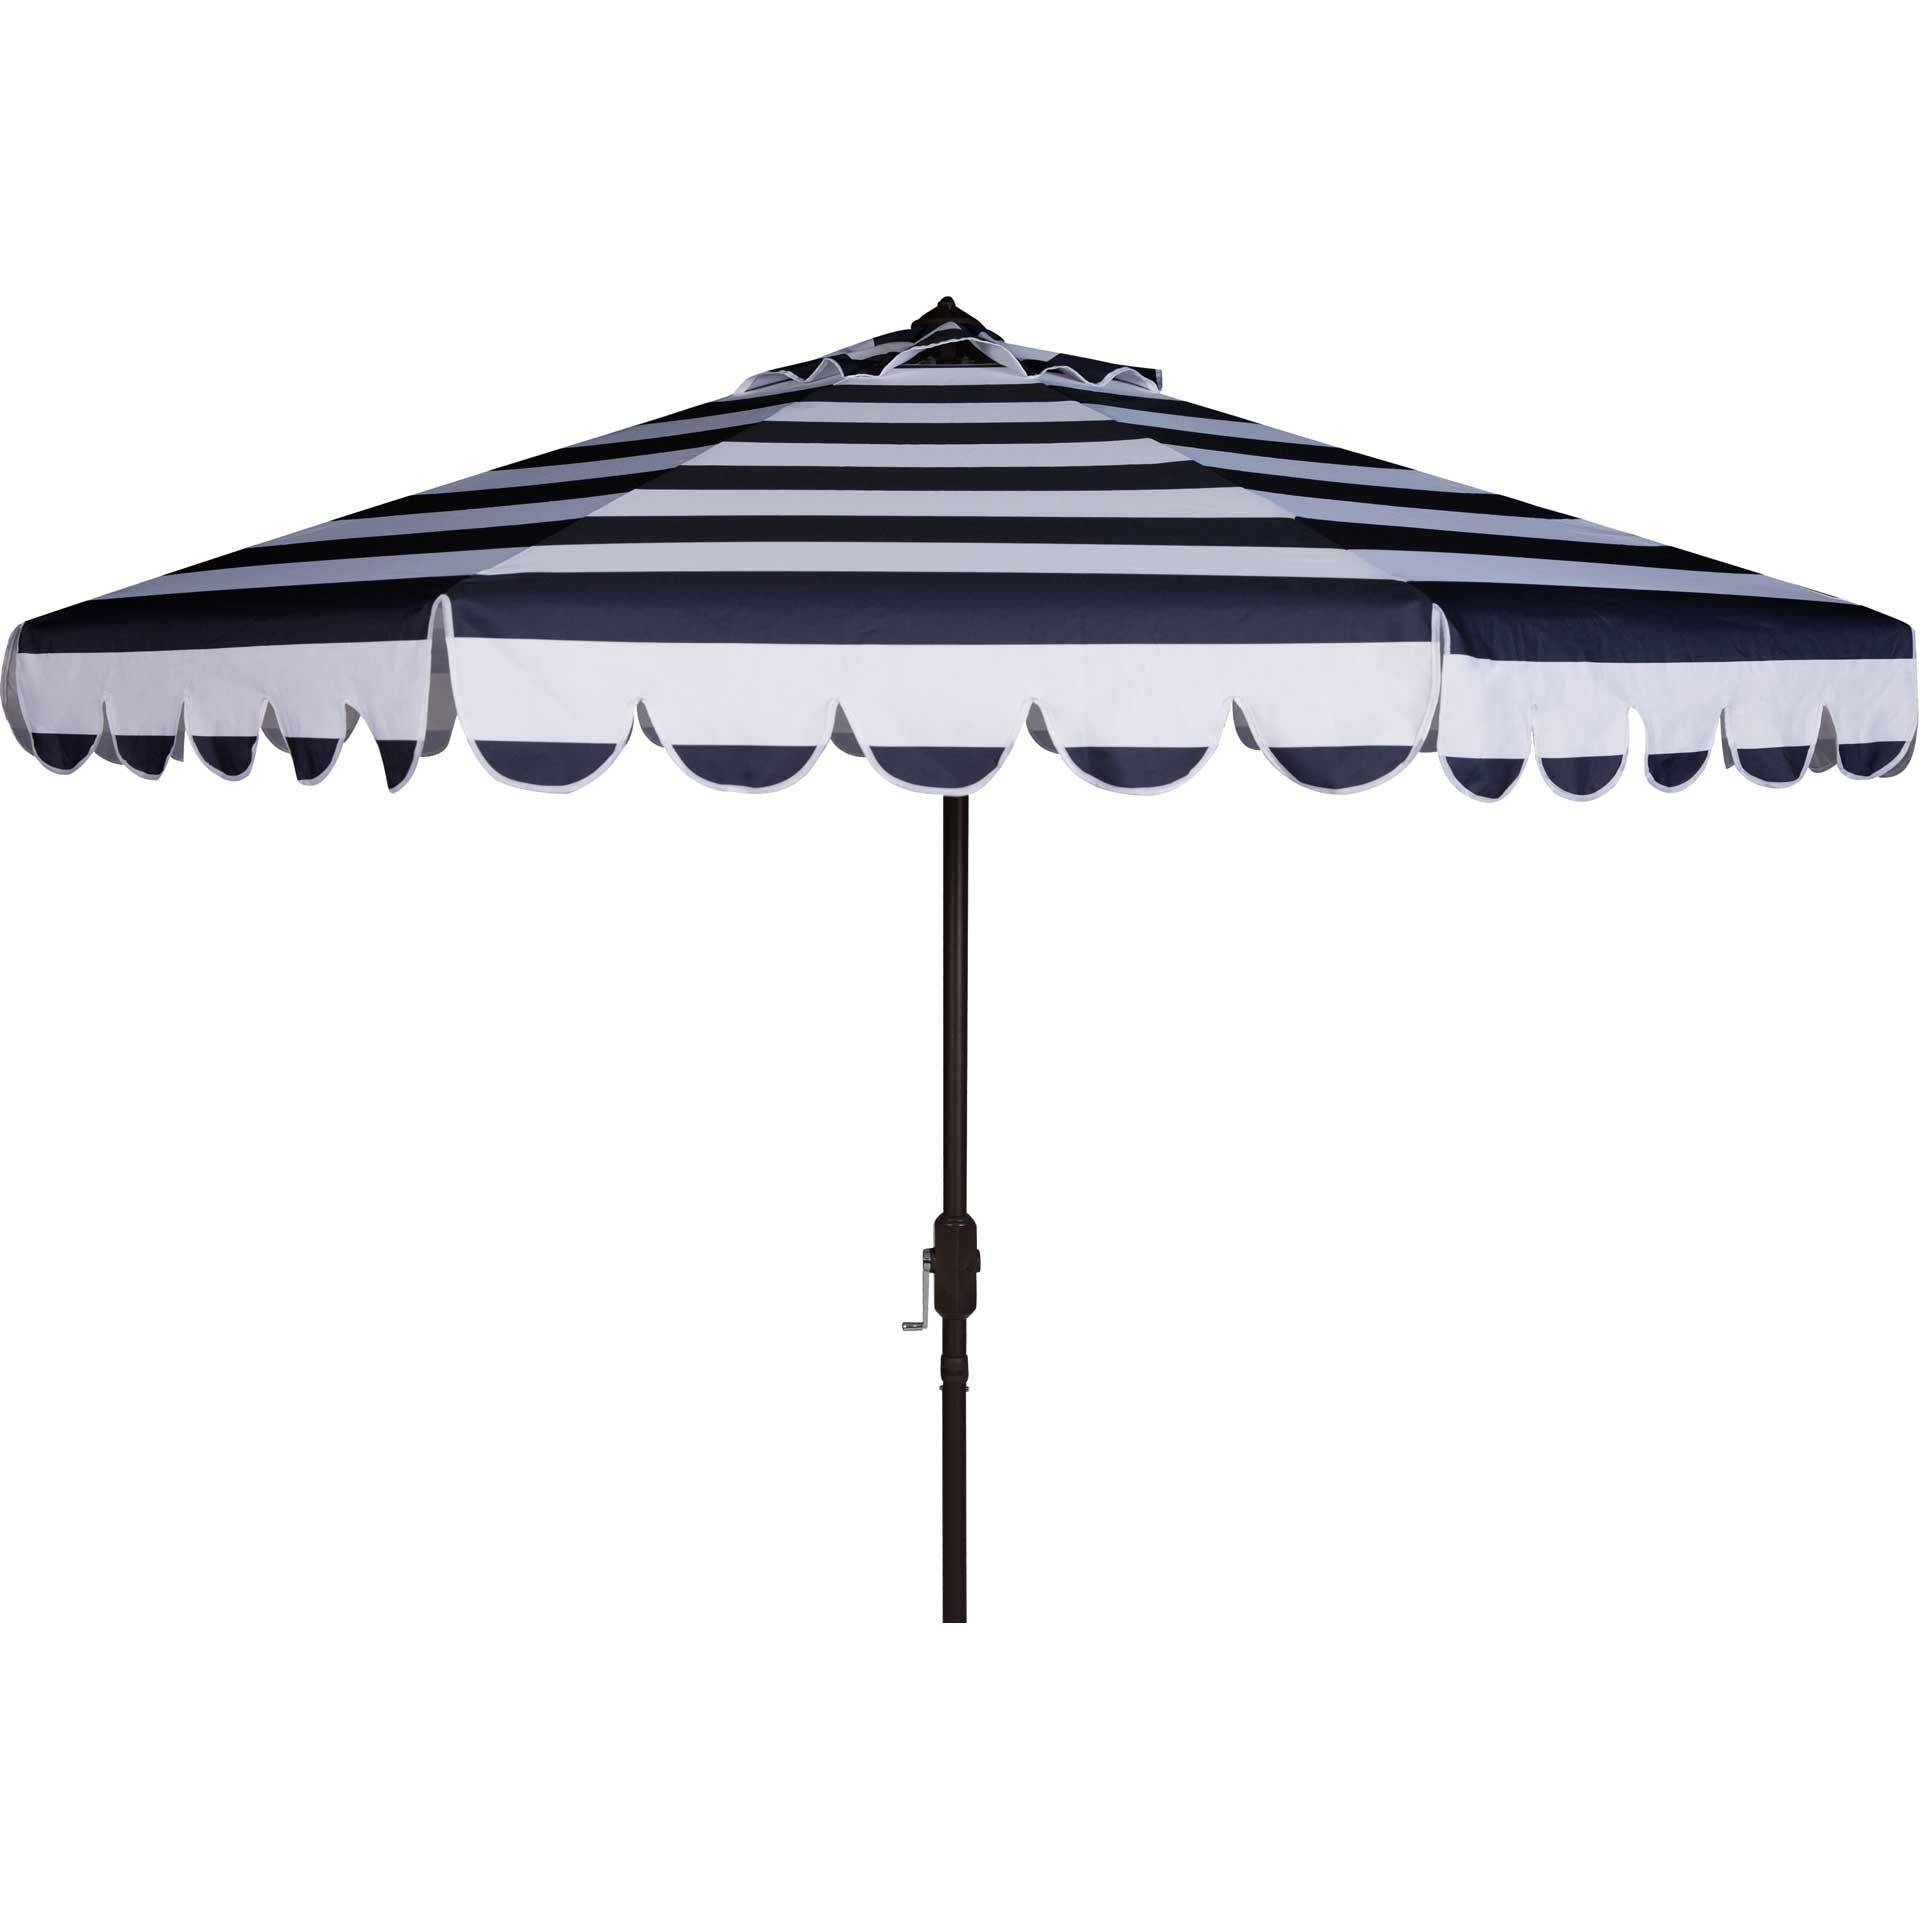 Malakai Single Scallop Push Button Tilt Umbrella Navy/White